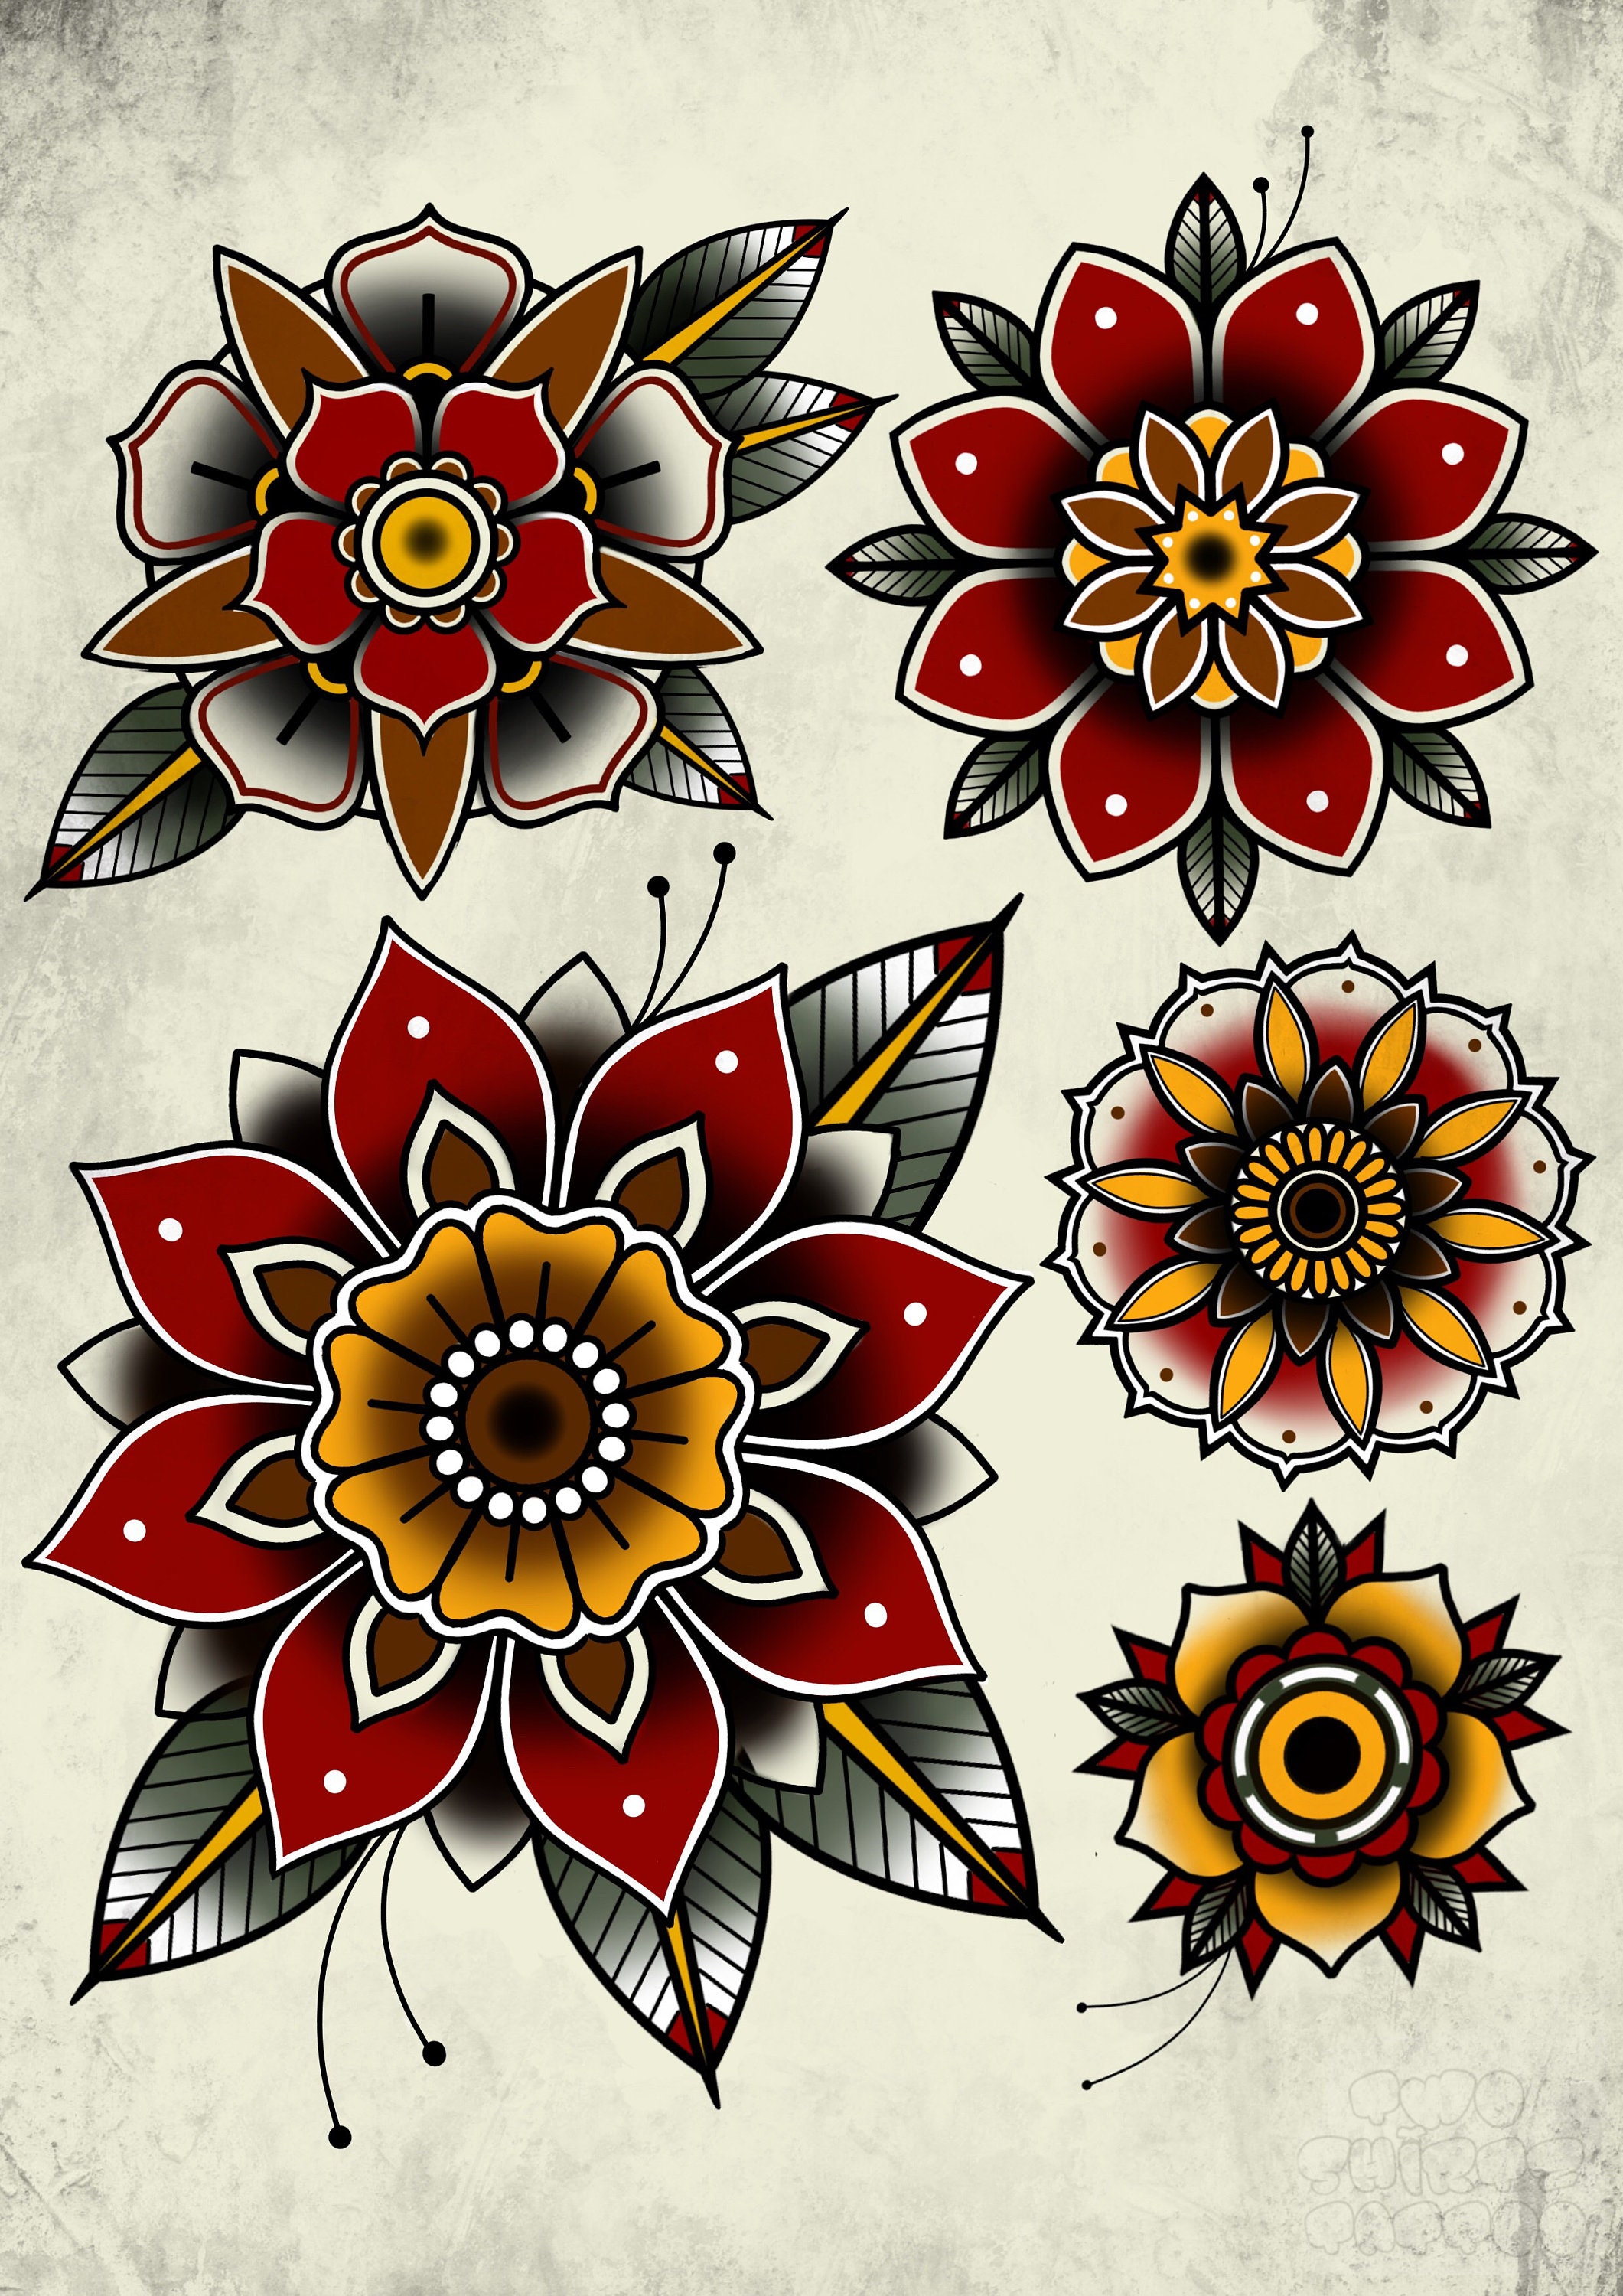 Mandalas and Flowers Tattoo on Shoulder - Best Tattoo Ideas Gallery